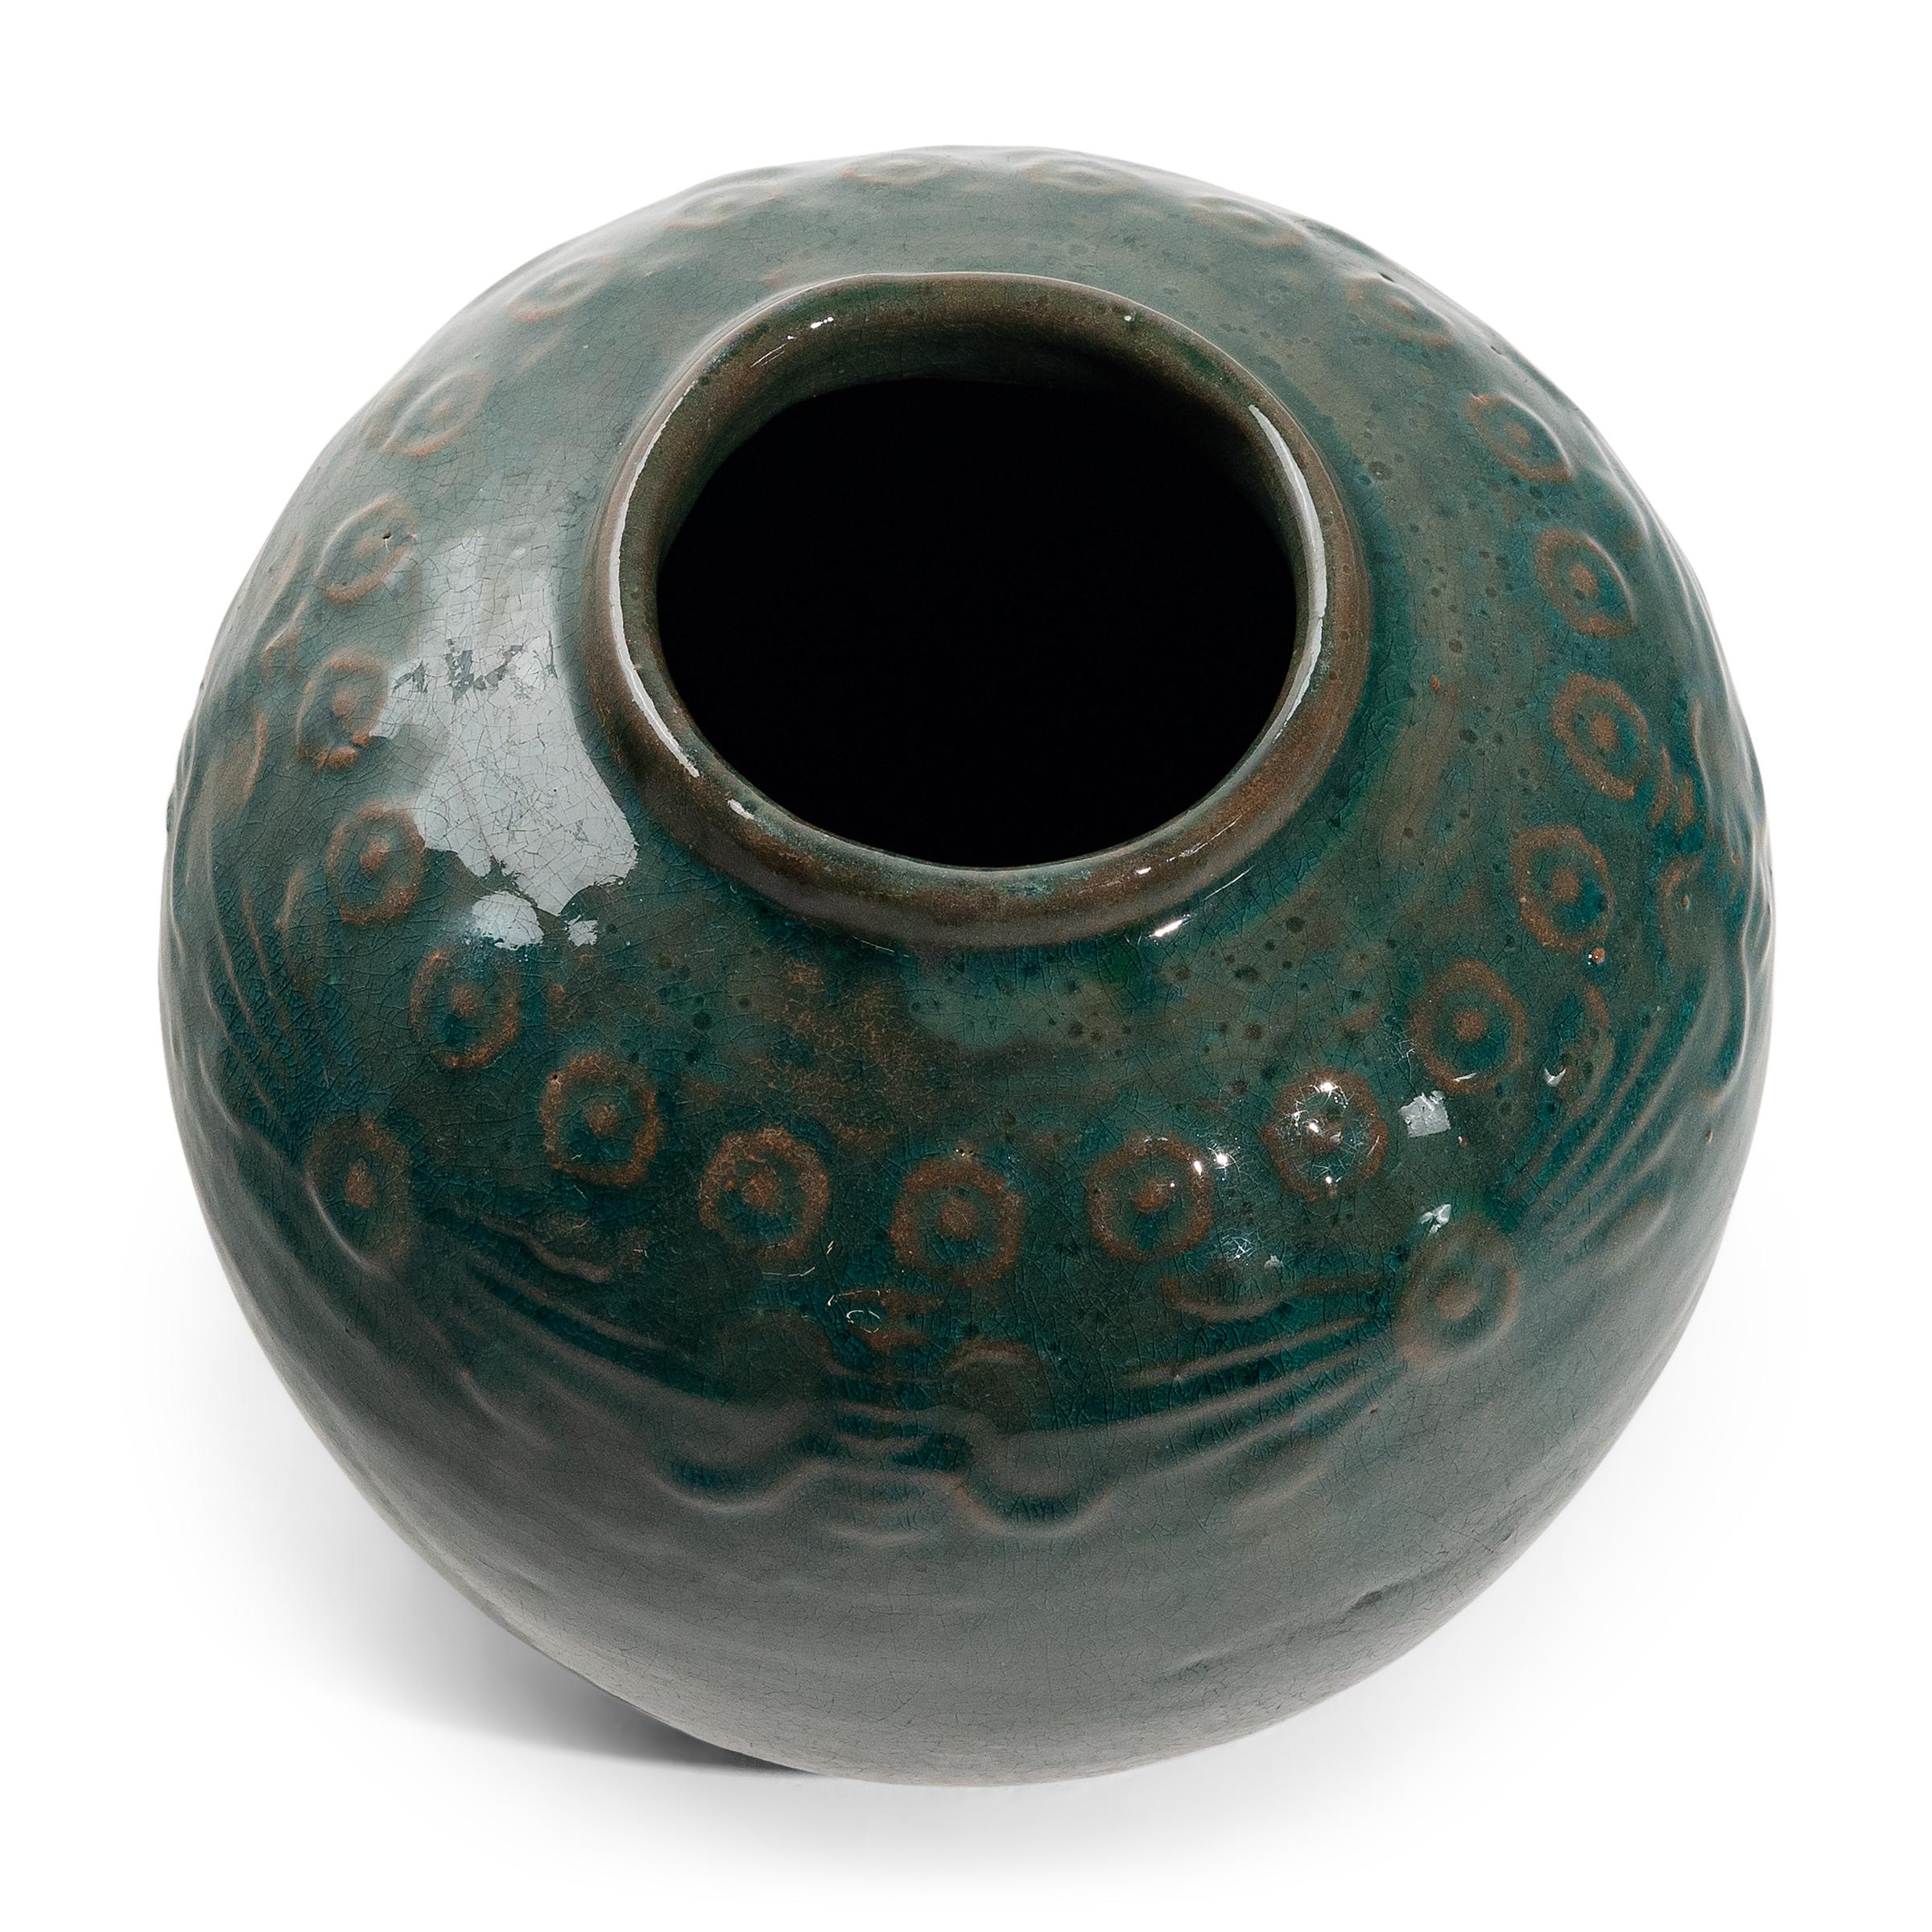 Glazed Chinese Jade Green Salt Jar, c. 1900